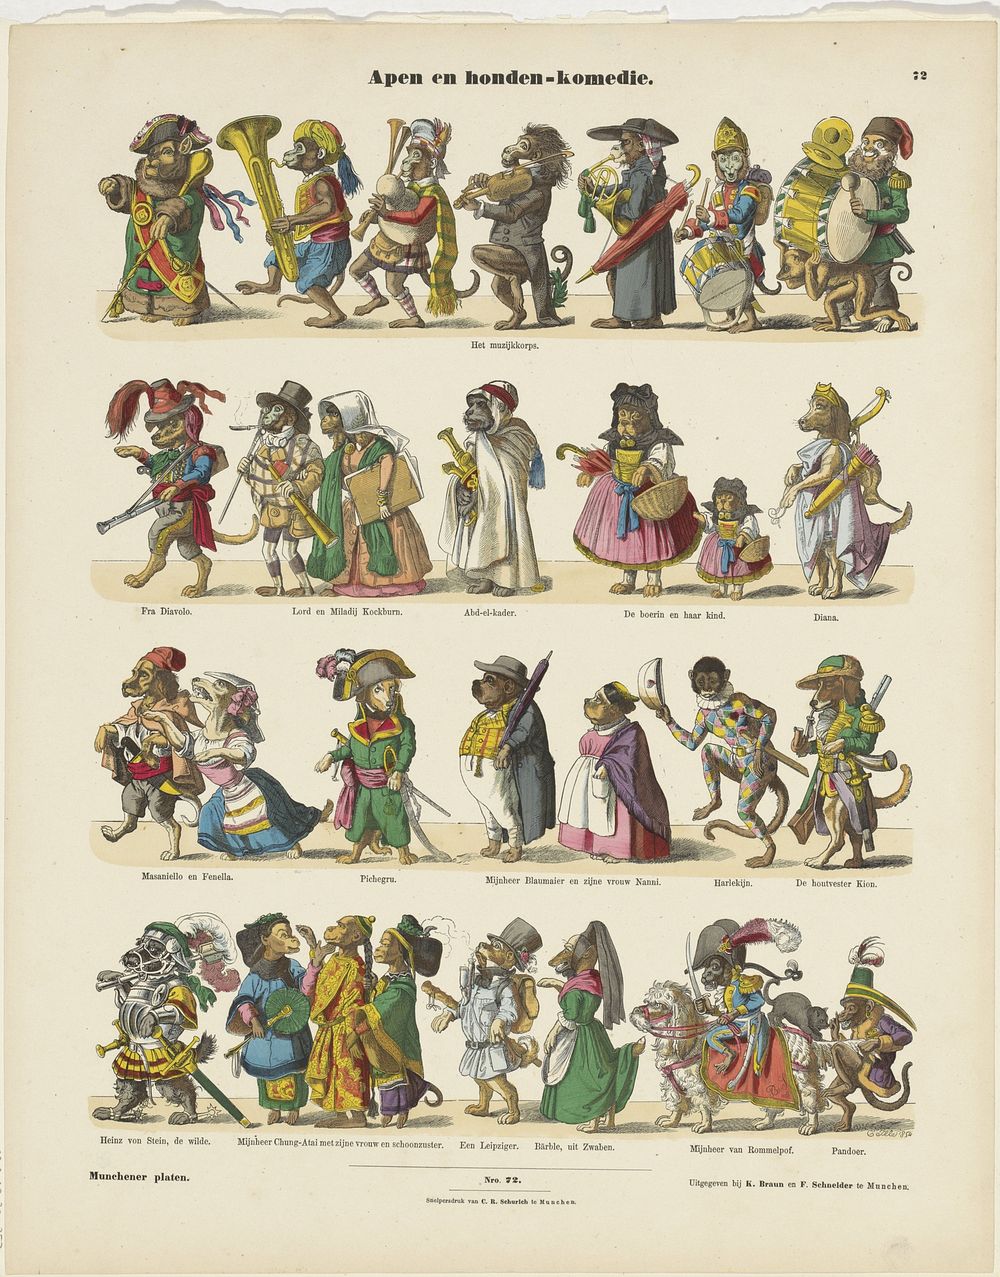 Apen en honden-komedie (1843 - c. 1920) by E Ille, K Braun en Fr Schneider and Carl Robert Schurich